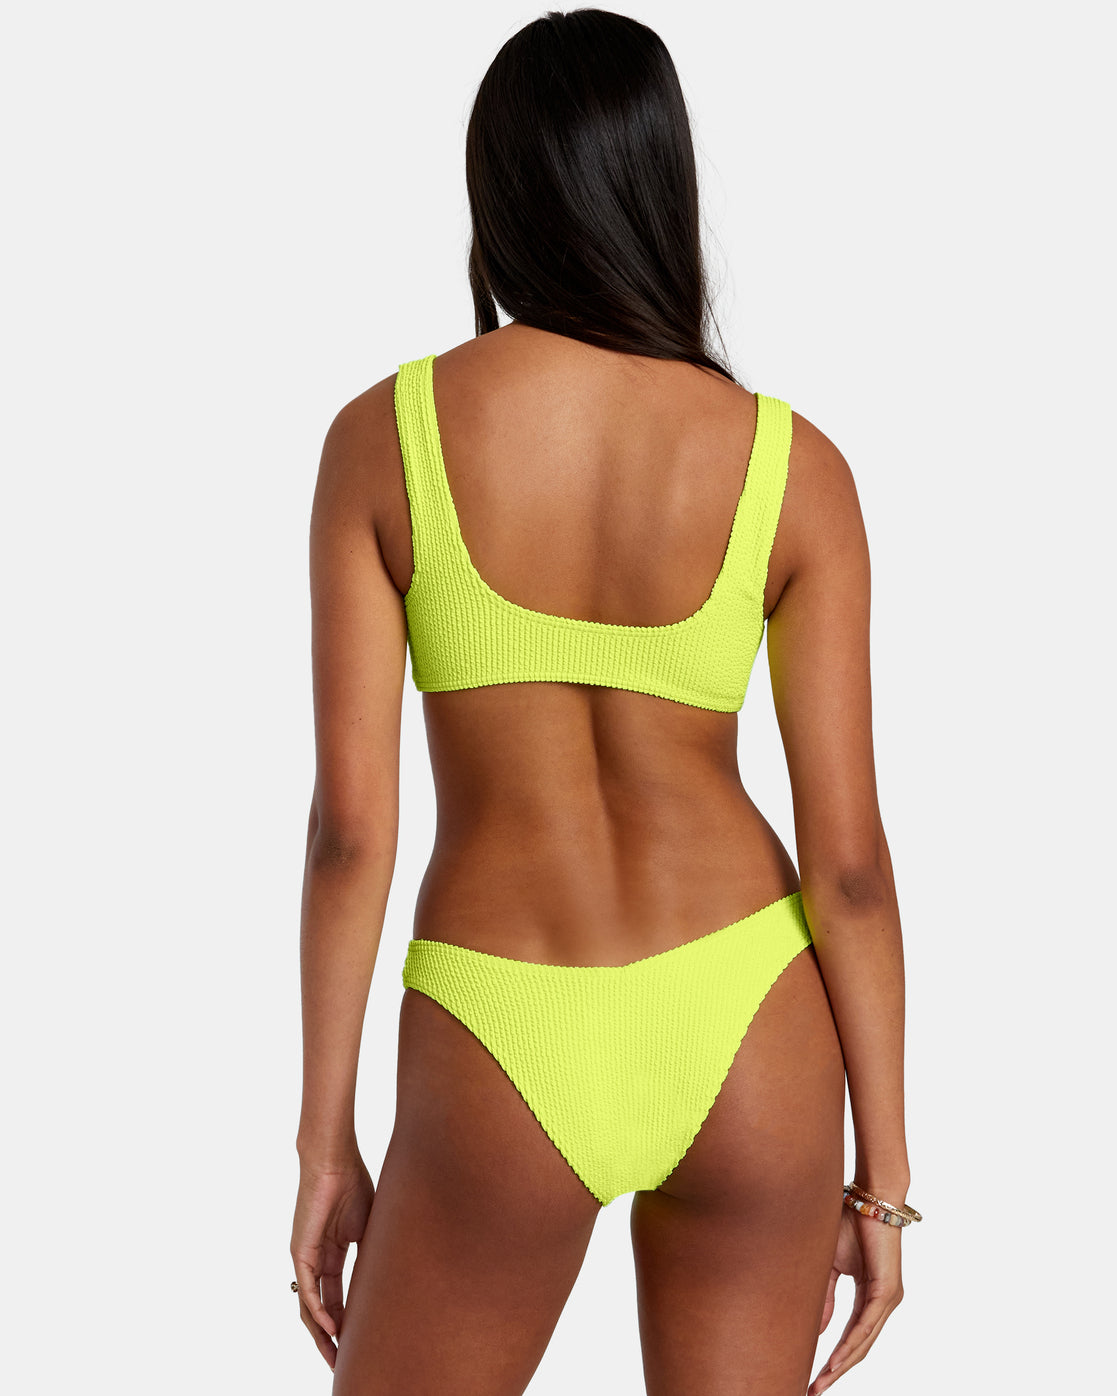 LVLUOKJ Silicone bikini bottoms, underwear swimsuit, swimsuits for